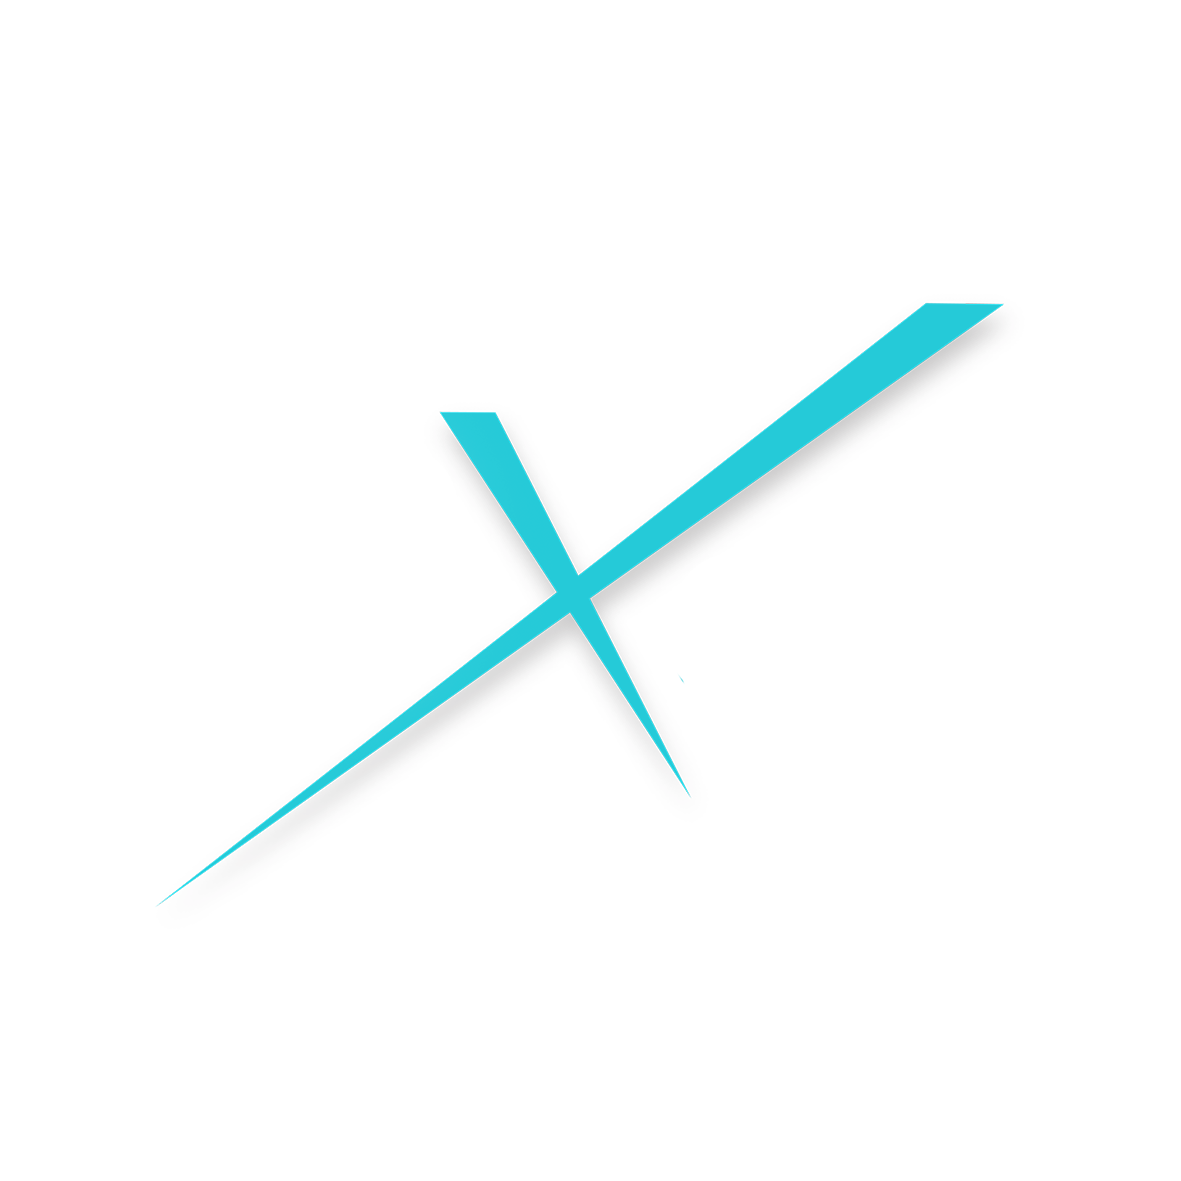 Ox Logo X Blueonwhite